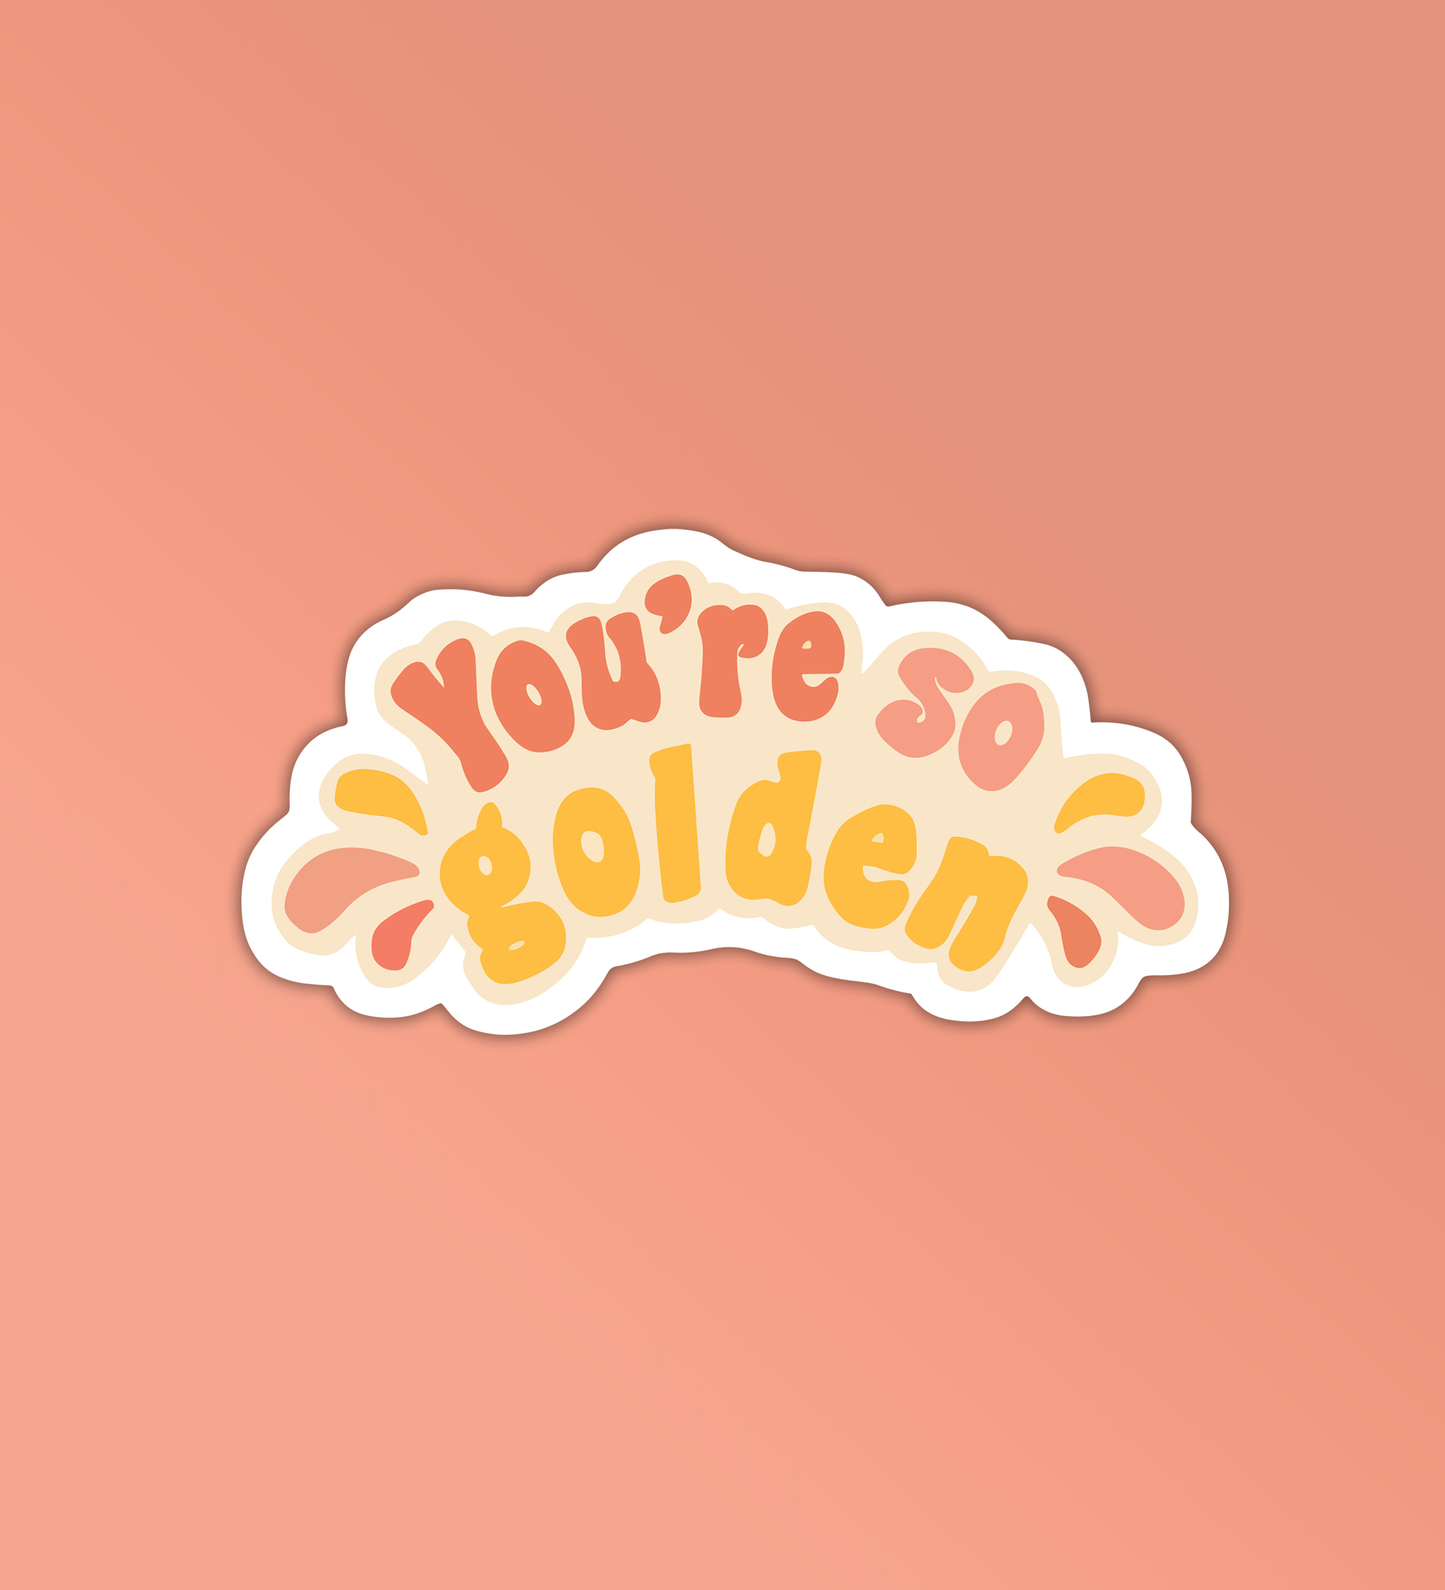 You're So Golden Sticker